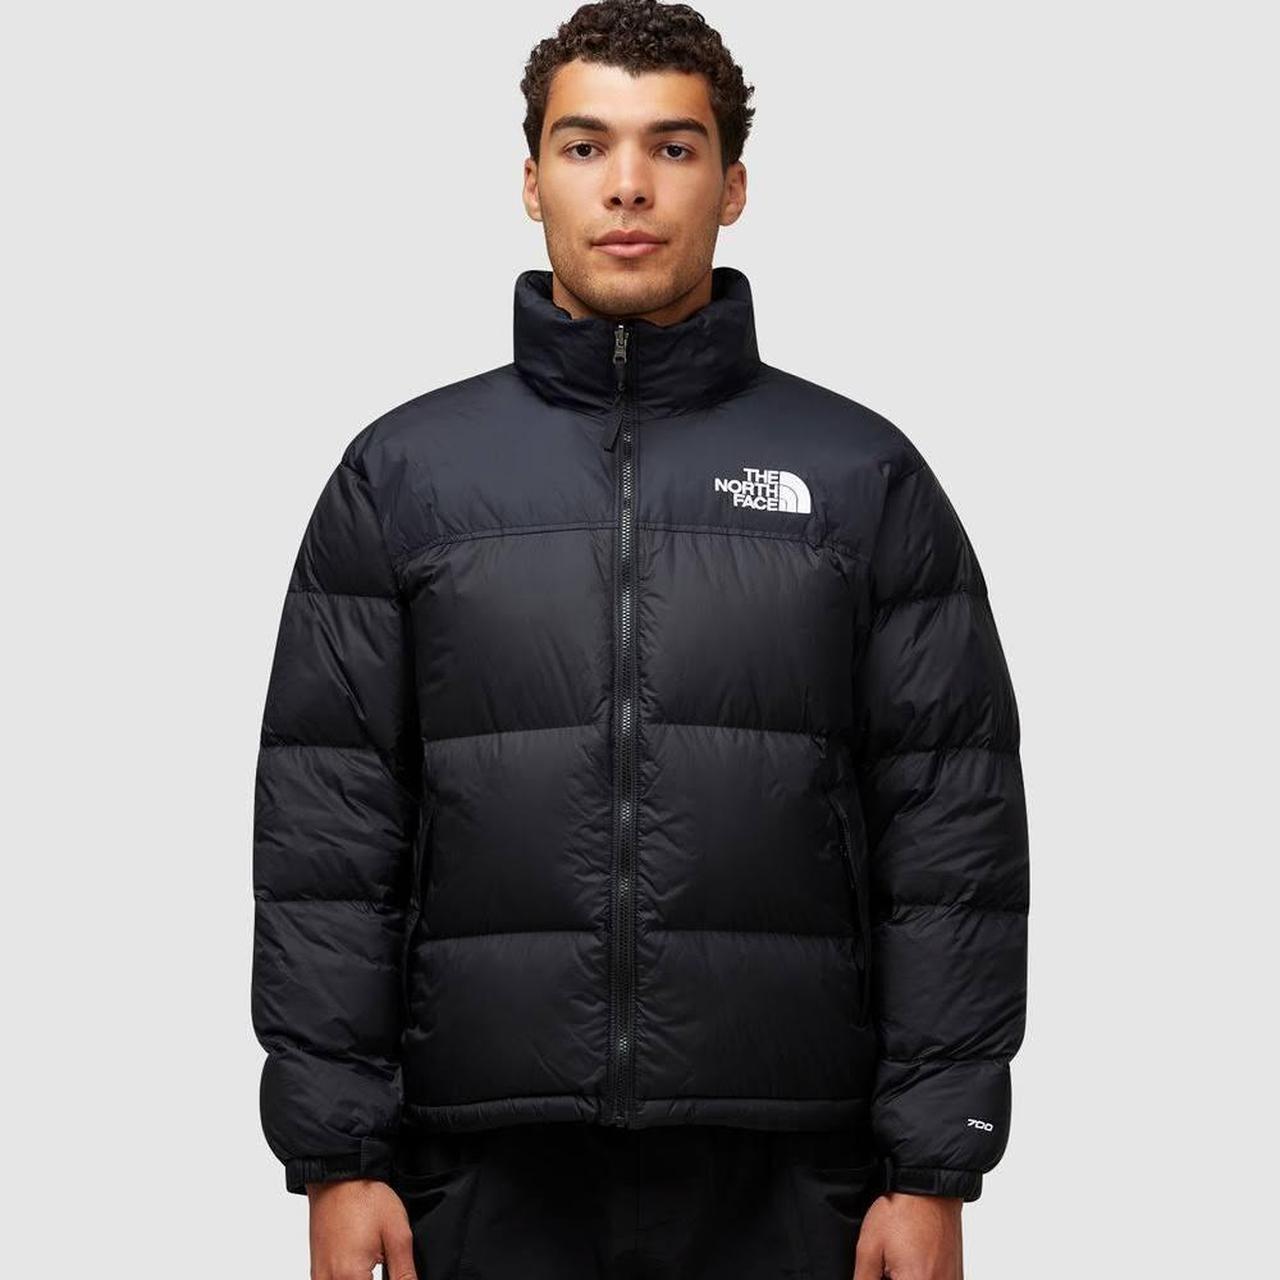 North Face Nuptse 700 Puffer Coat Jacket Size Men’s... - Depop